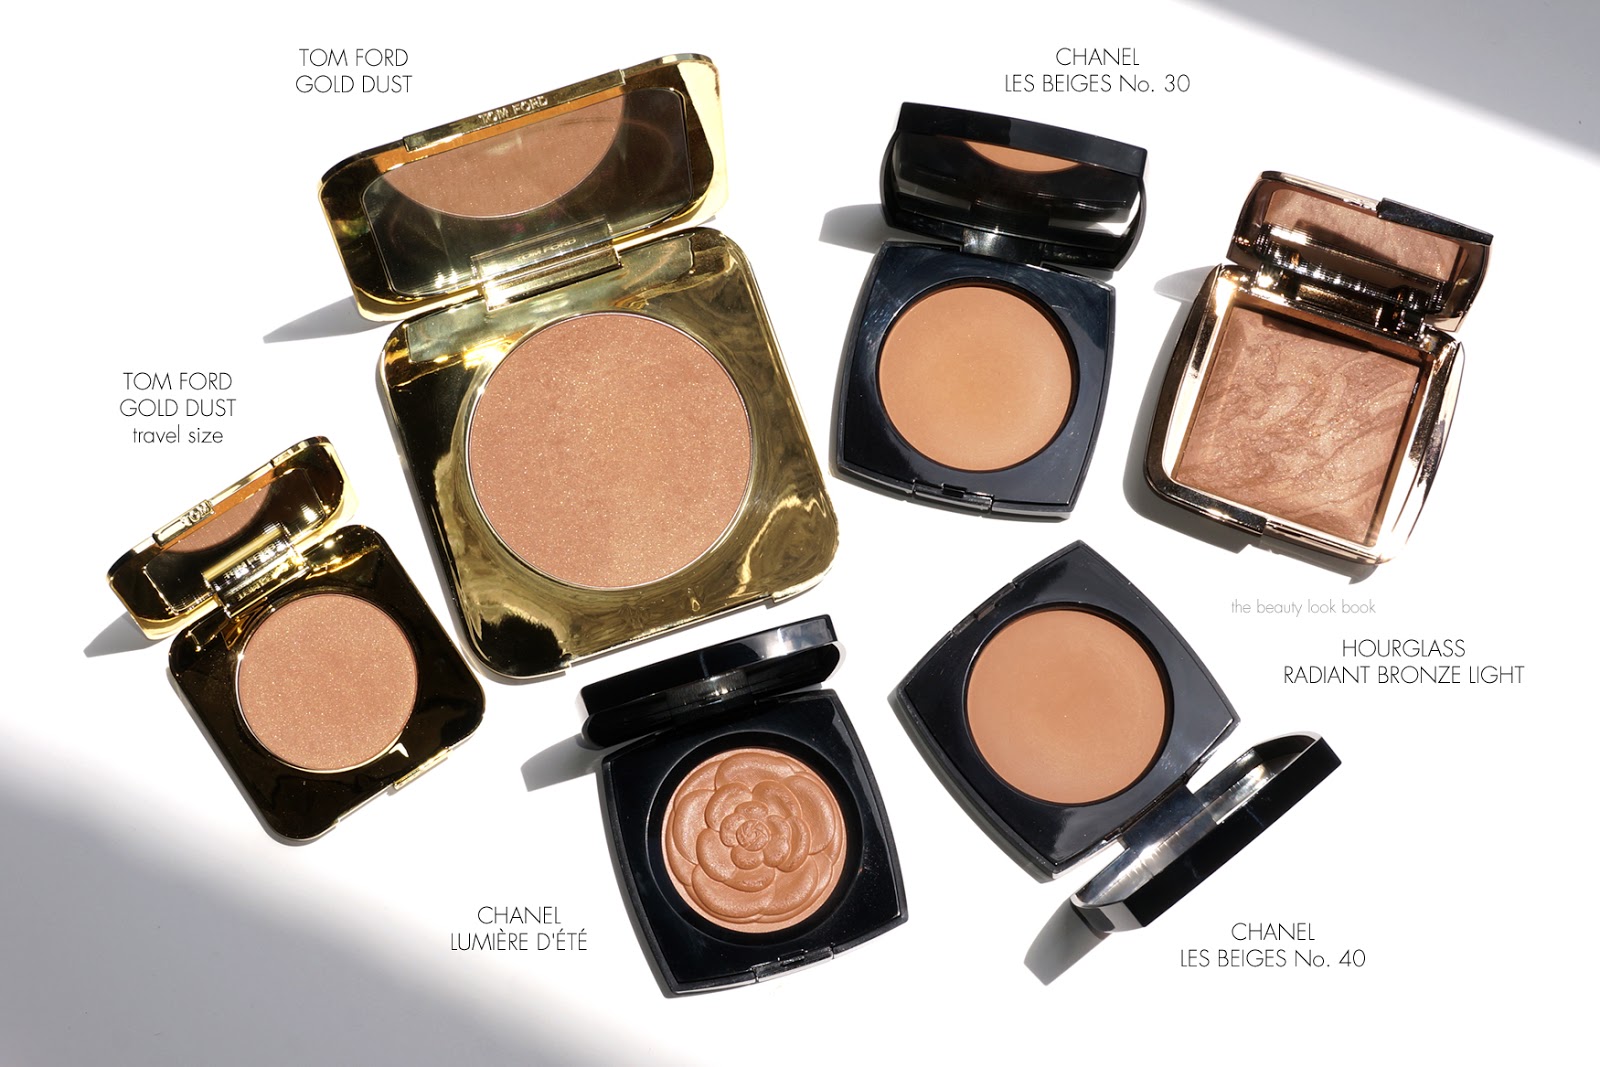 Chanel Lumière d'Été Illuminating Powder for Summer 2015 - The